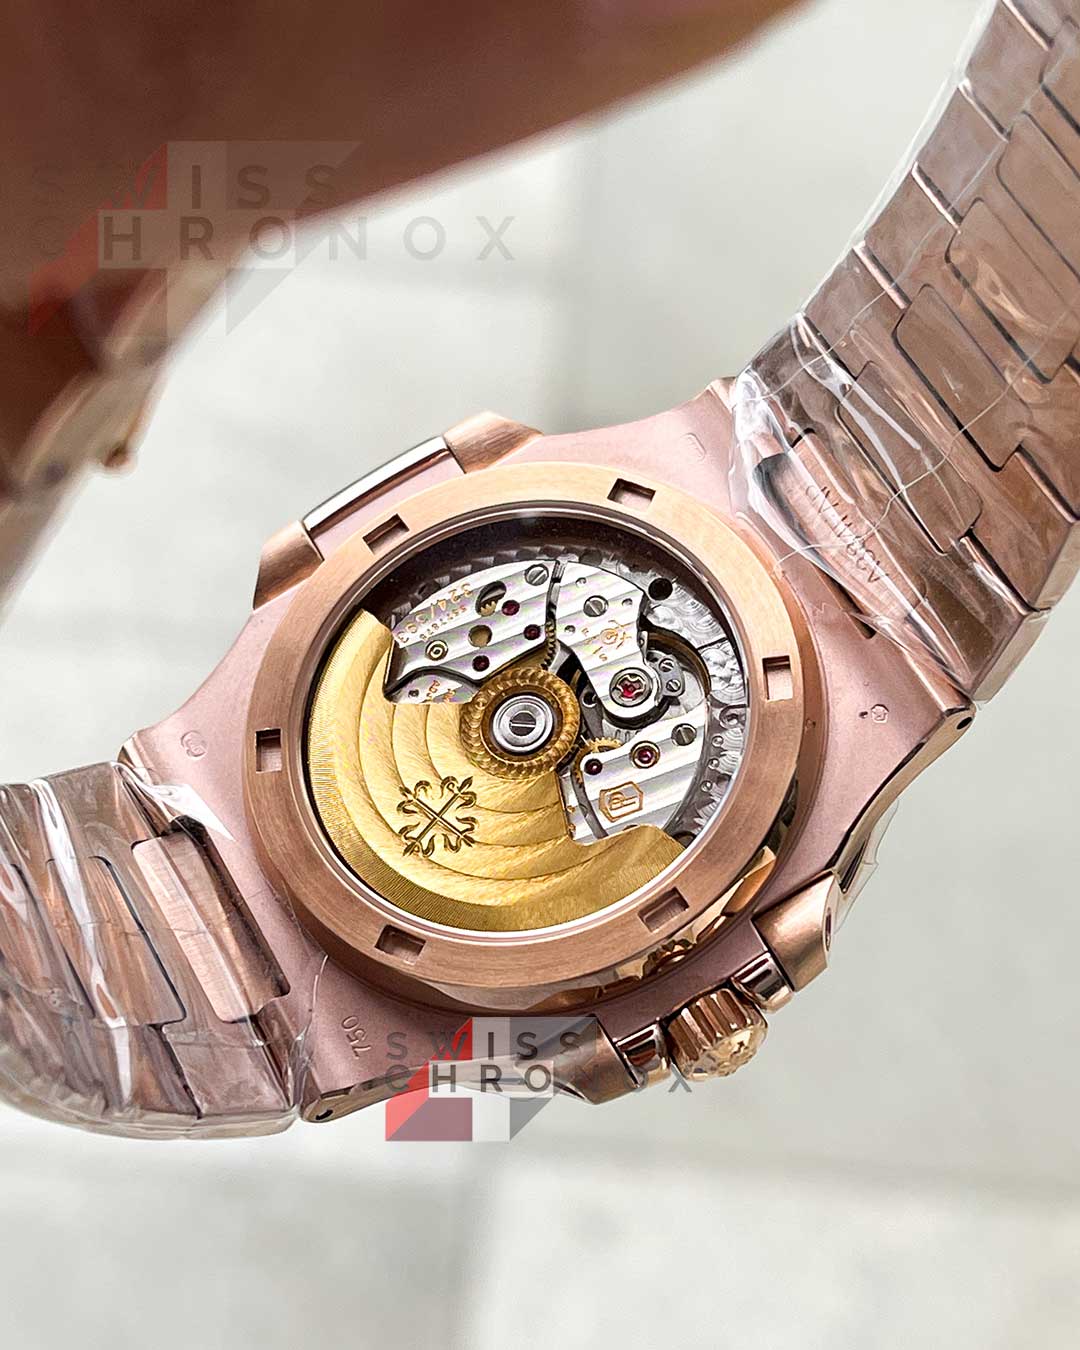 patek philippe nautilus brown dial watch 5711 1r 001 4